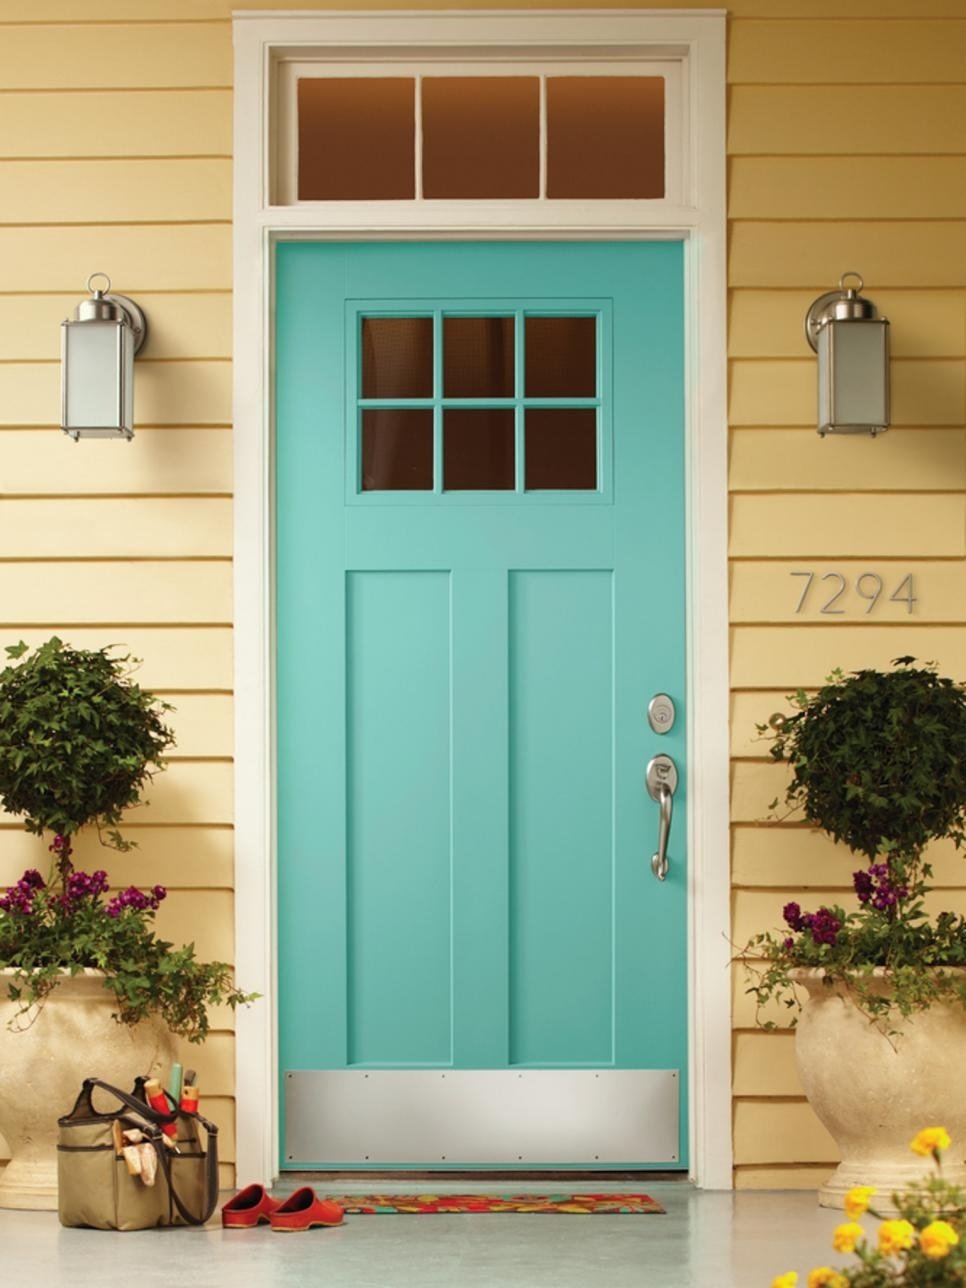 10 Best Front Door Paint Color Ideas front door paint colors in wonderful home decor ideas p70 with front 2024